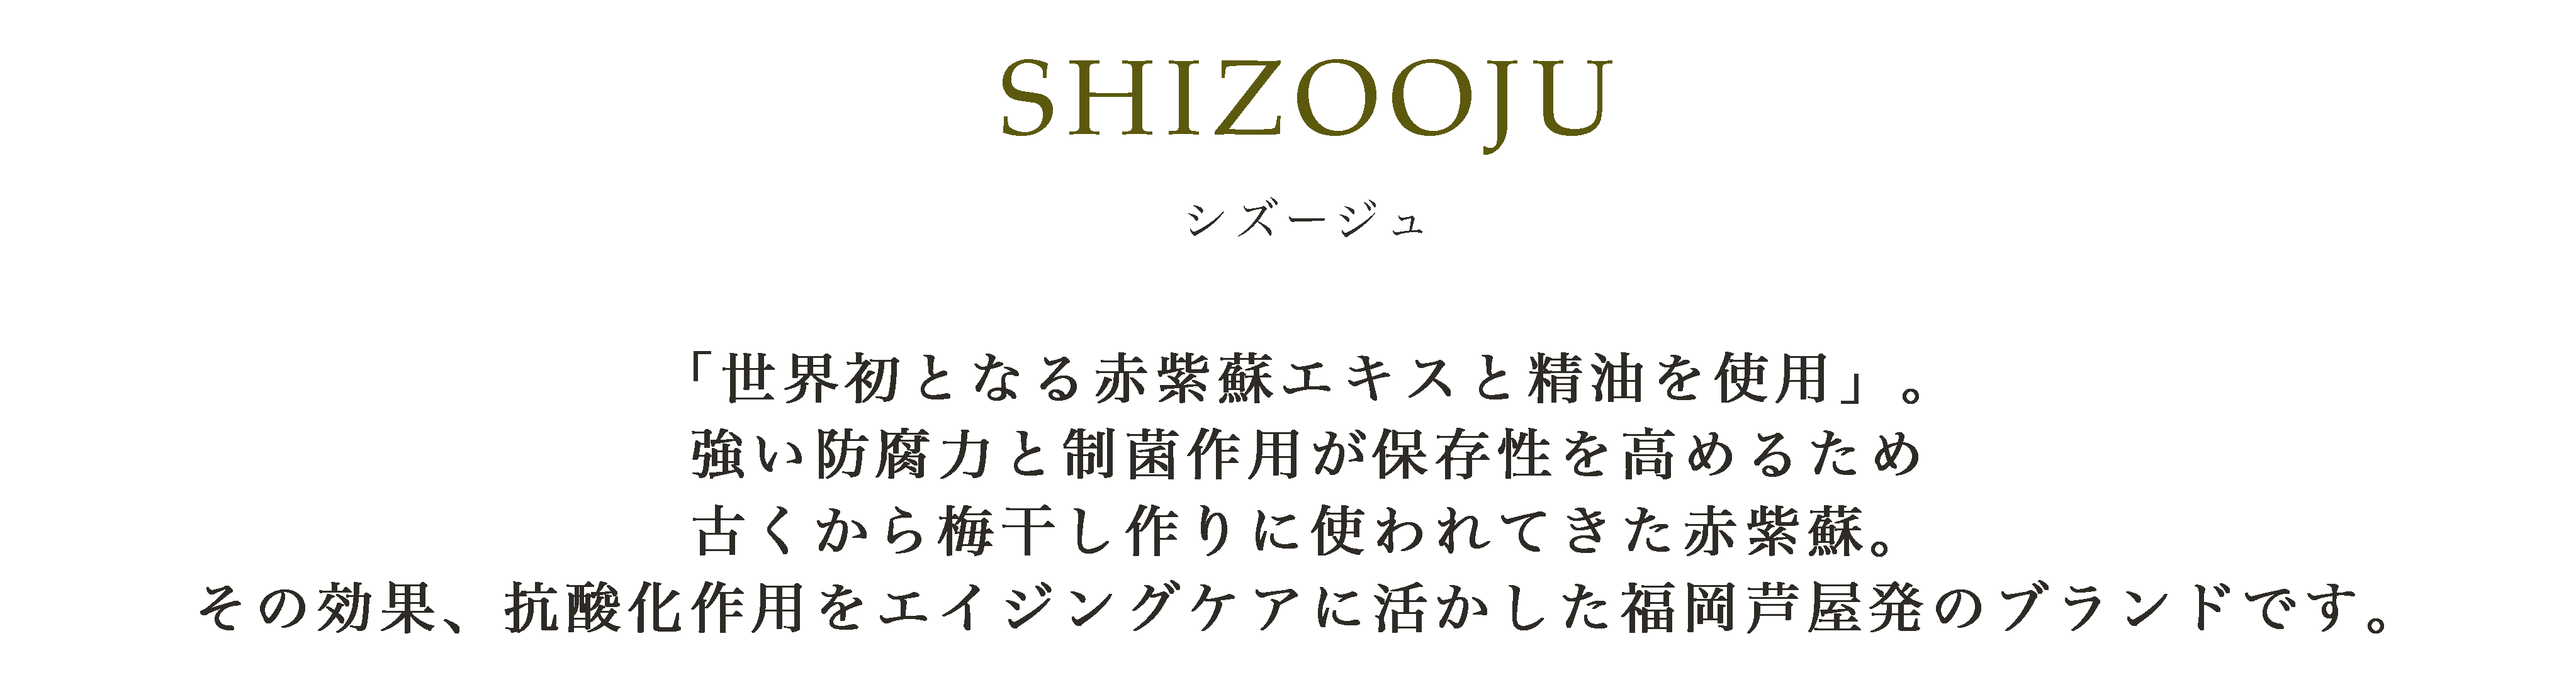 SHIZOOJU